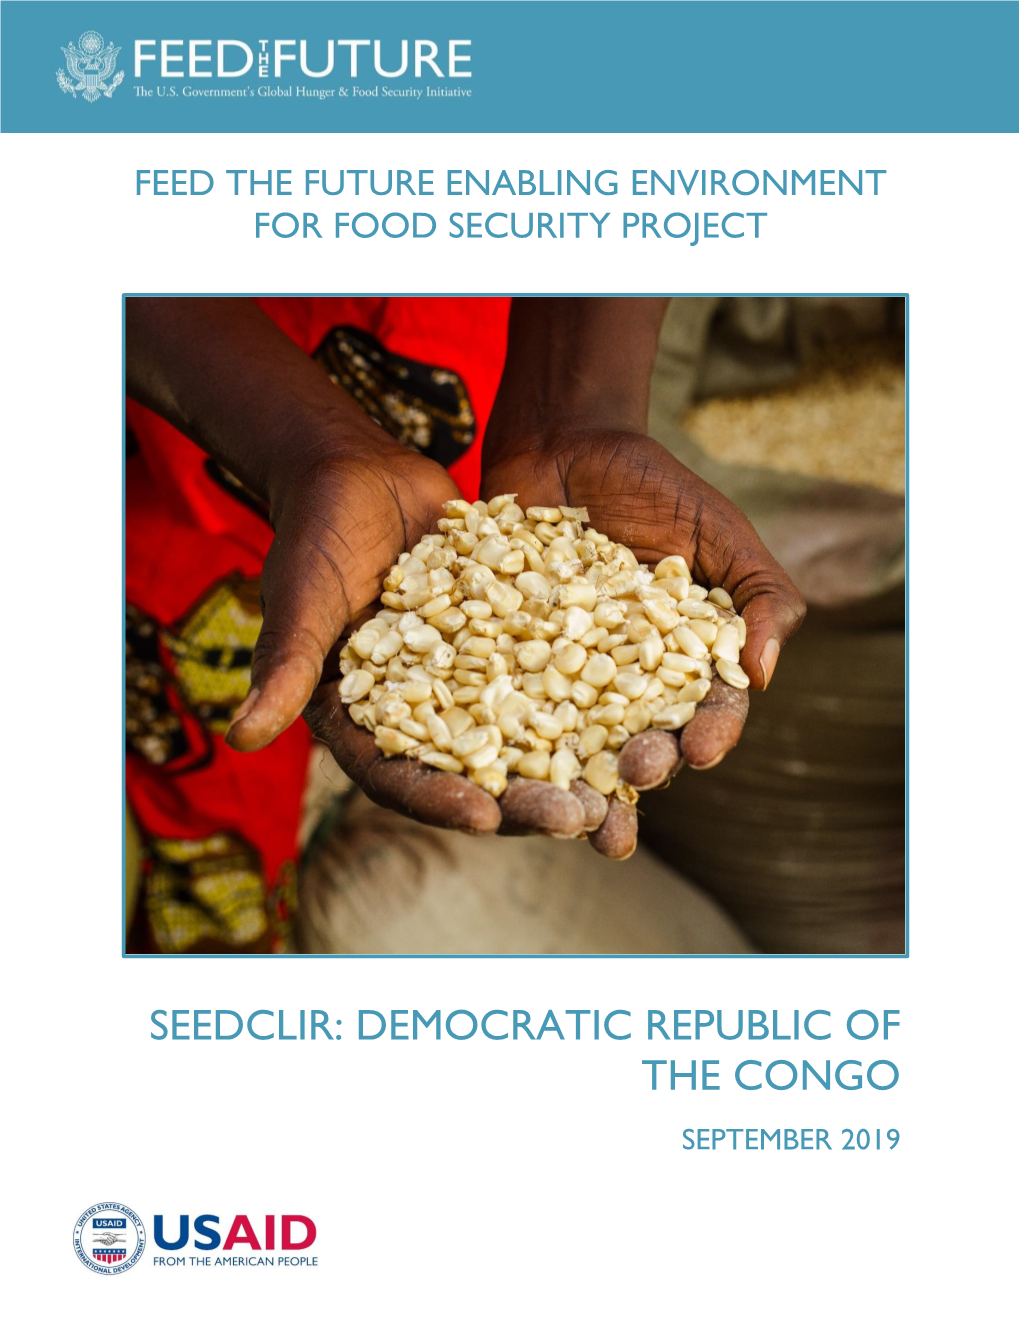 Seedclir: Democratic Republic of the Congo September 2019